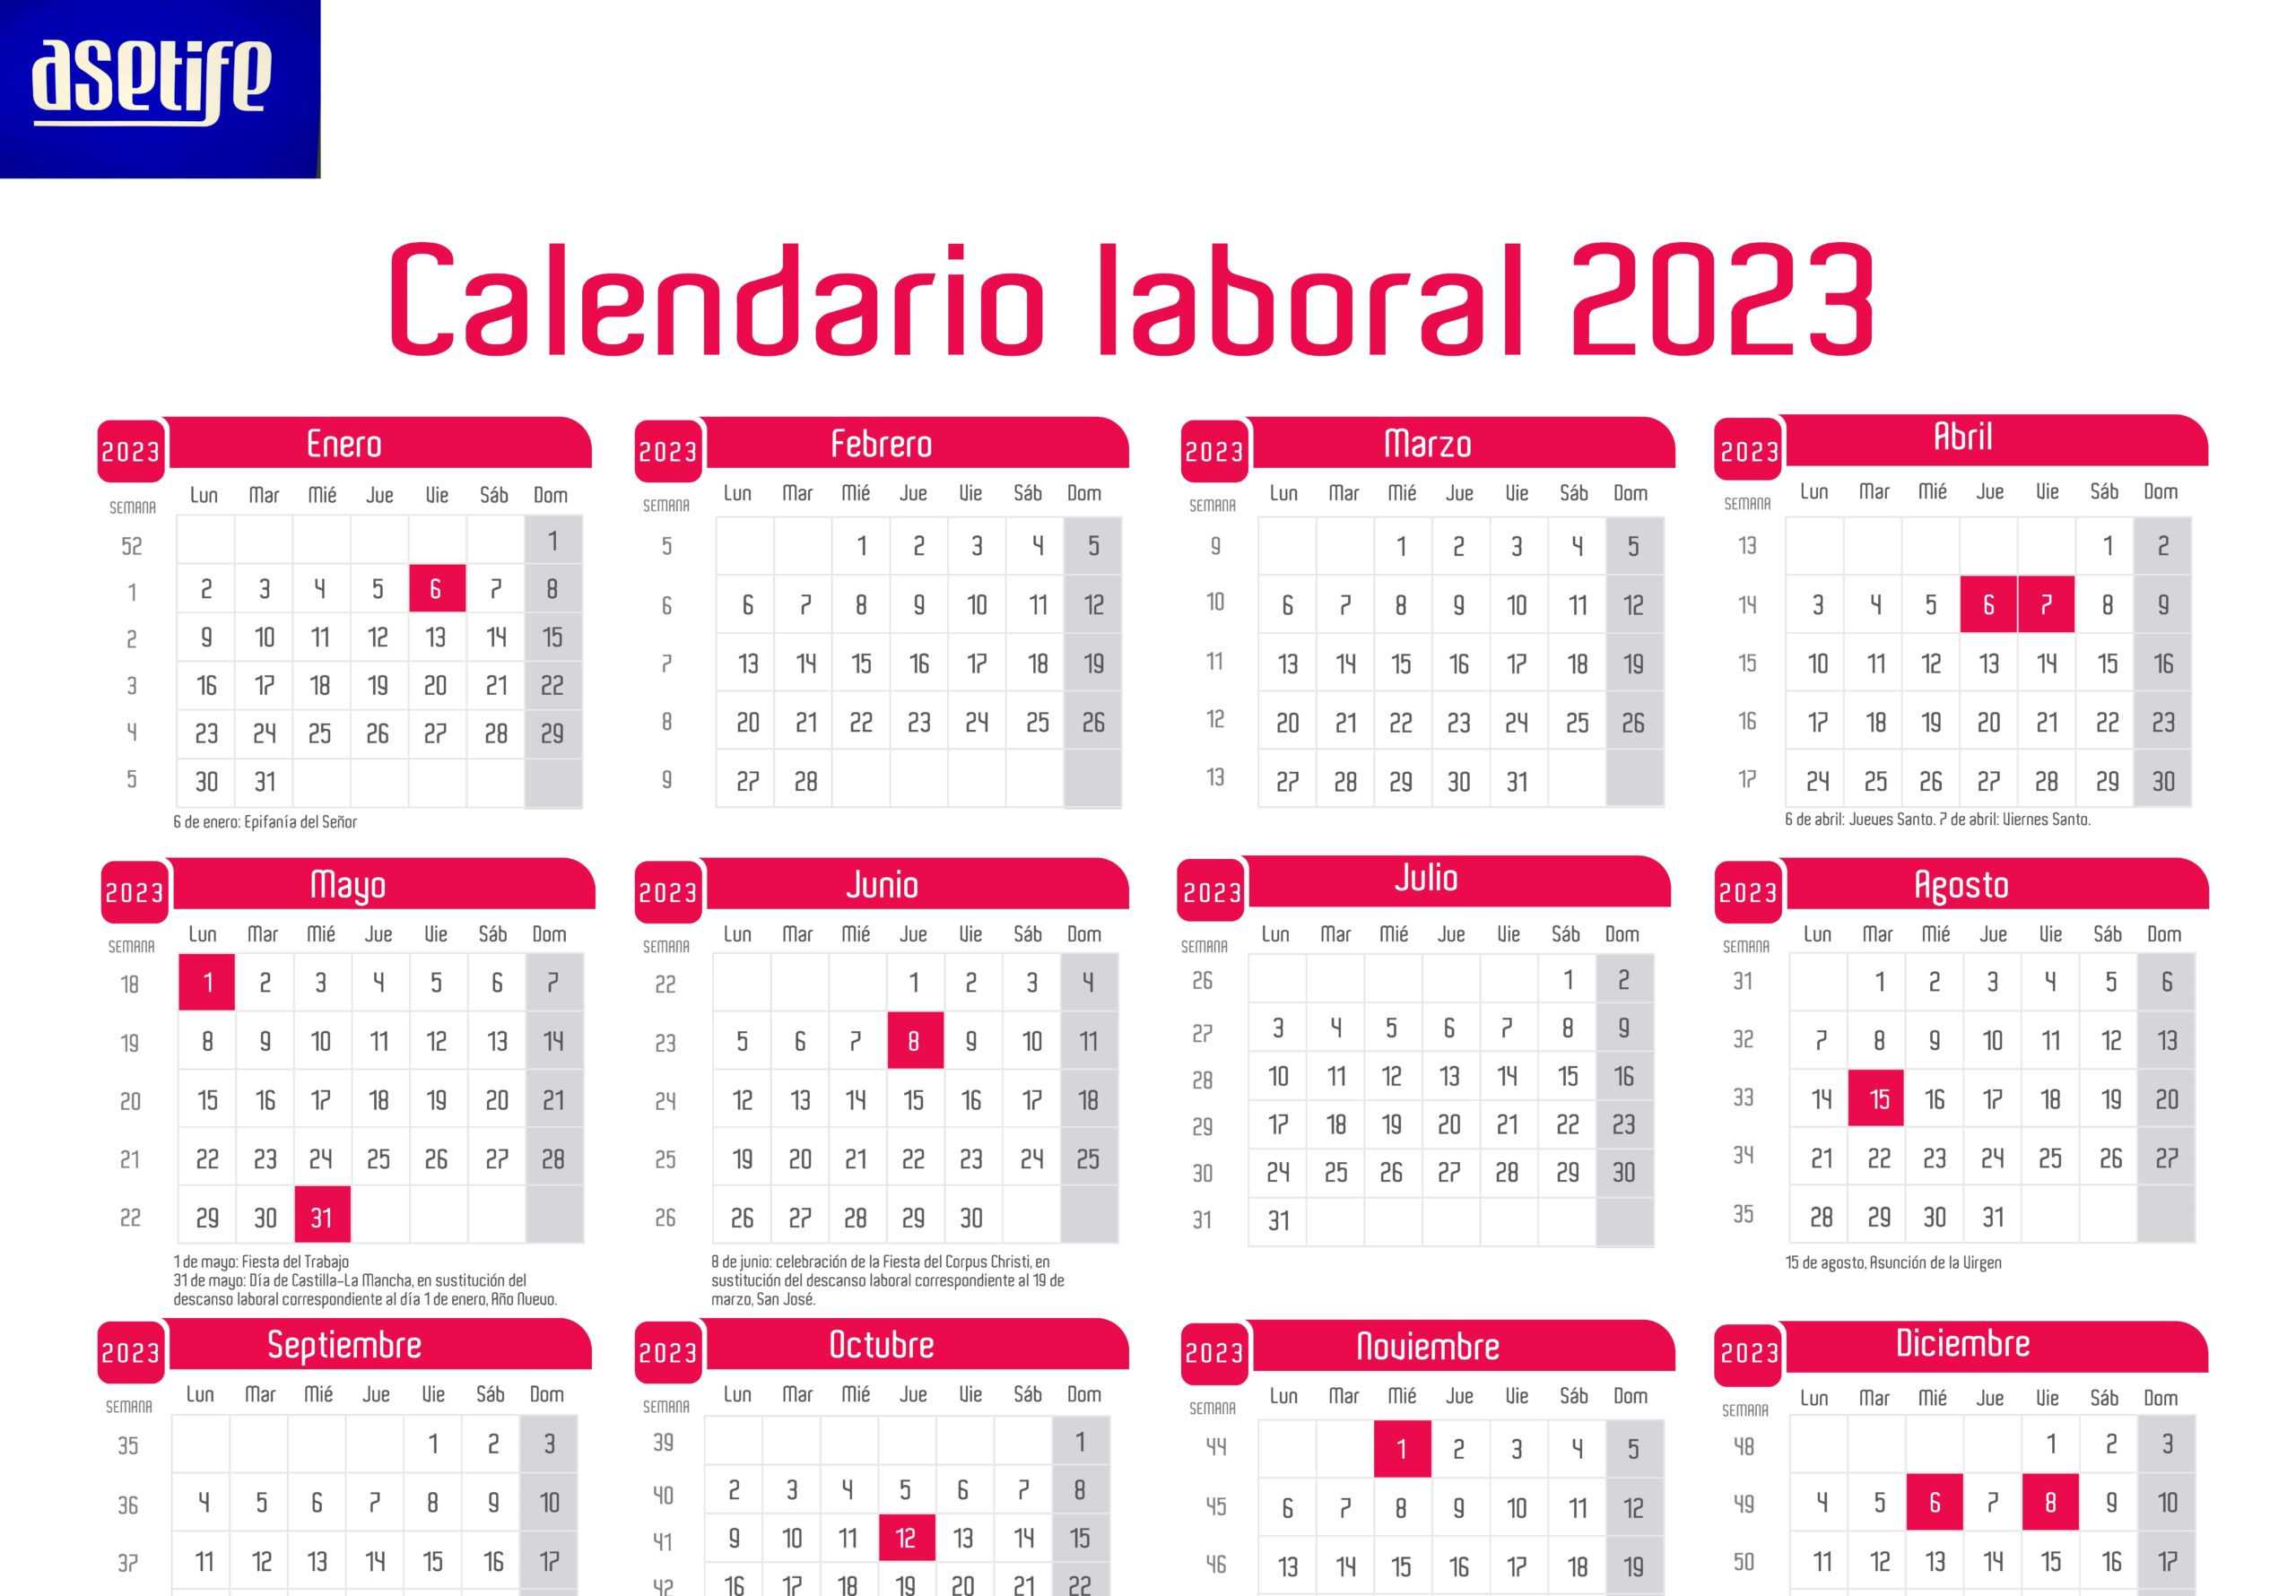 CALENDARIO LABORAL 2023 Pagina 1 scaled - Calendario Laboral 2023